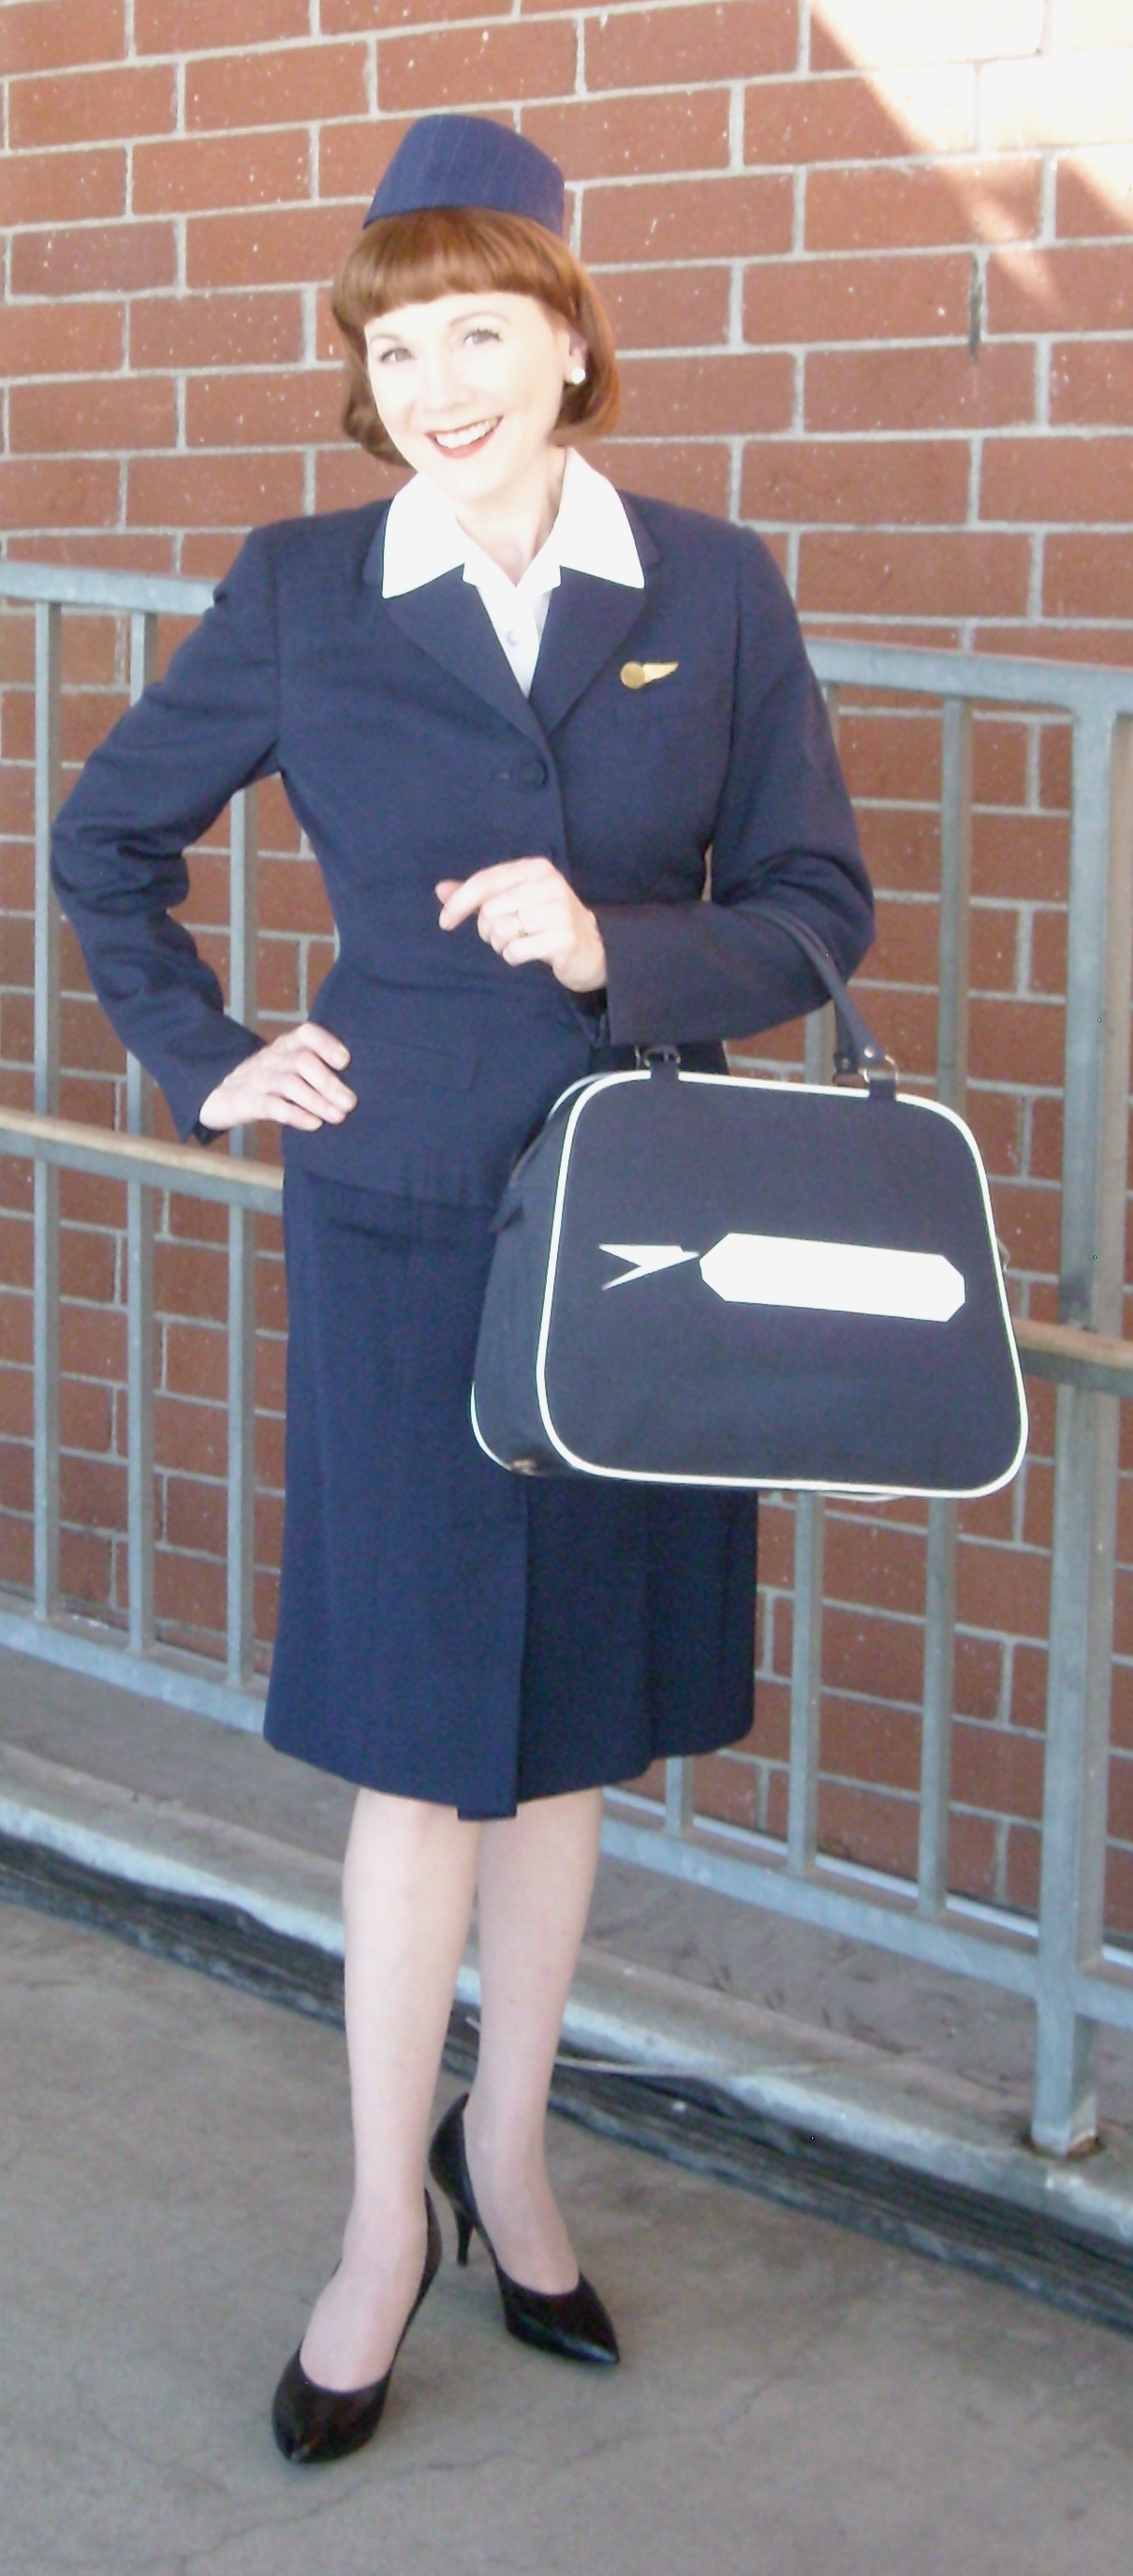 Barbara Keegan in SAVING MR. BANKS (2013)